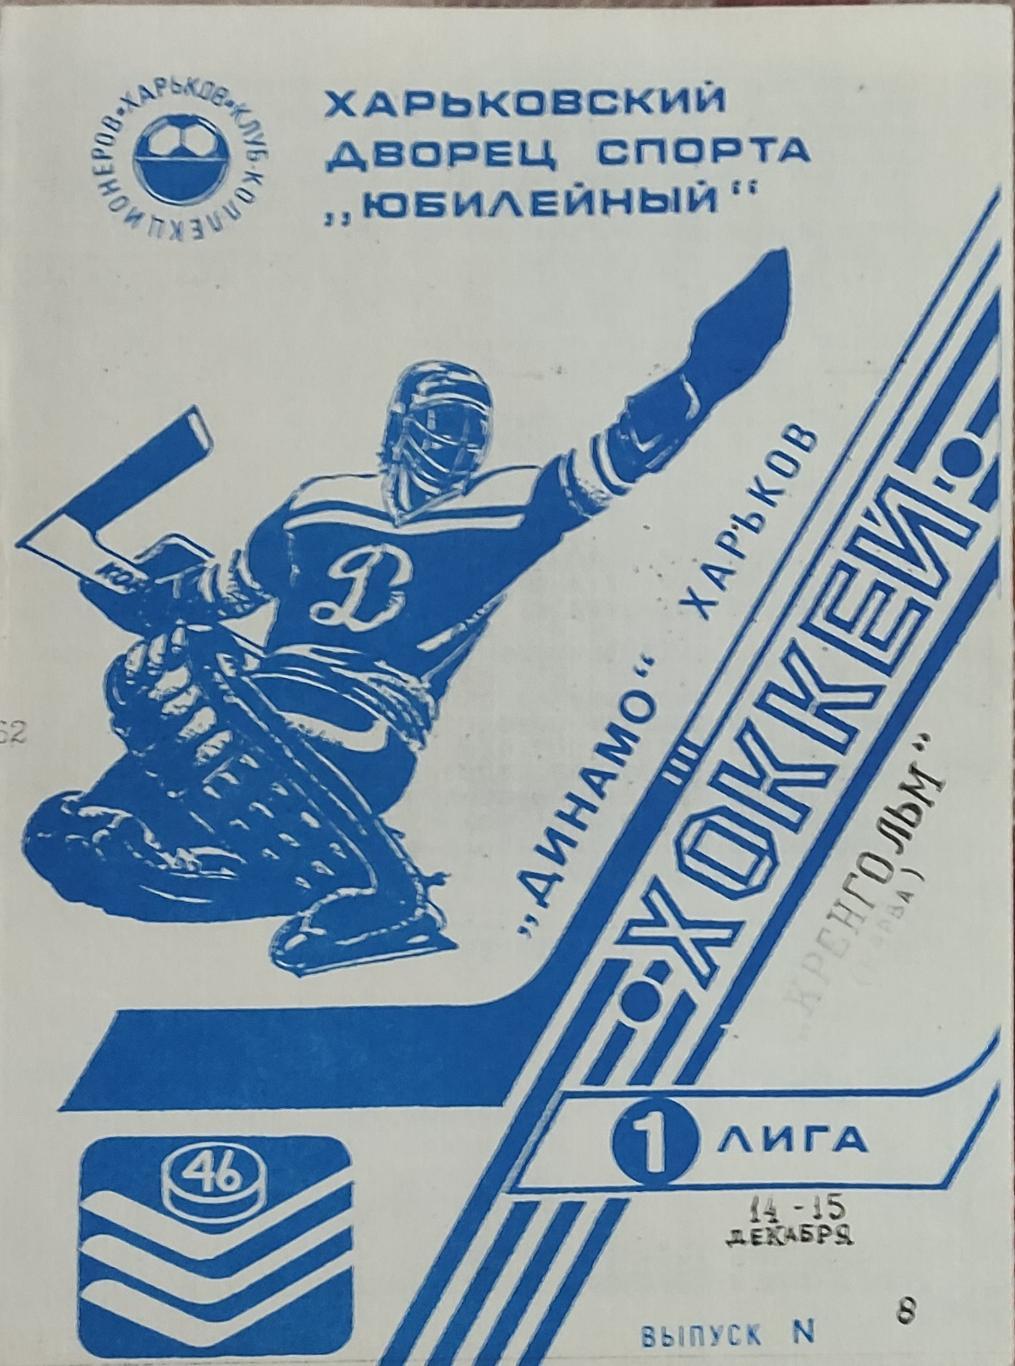 Динамо Харьков -Кренгольм Нарва. 14-15.12.1991.